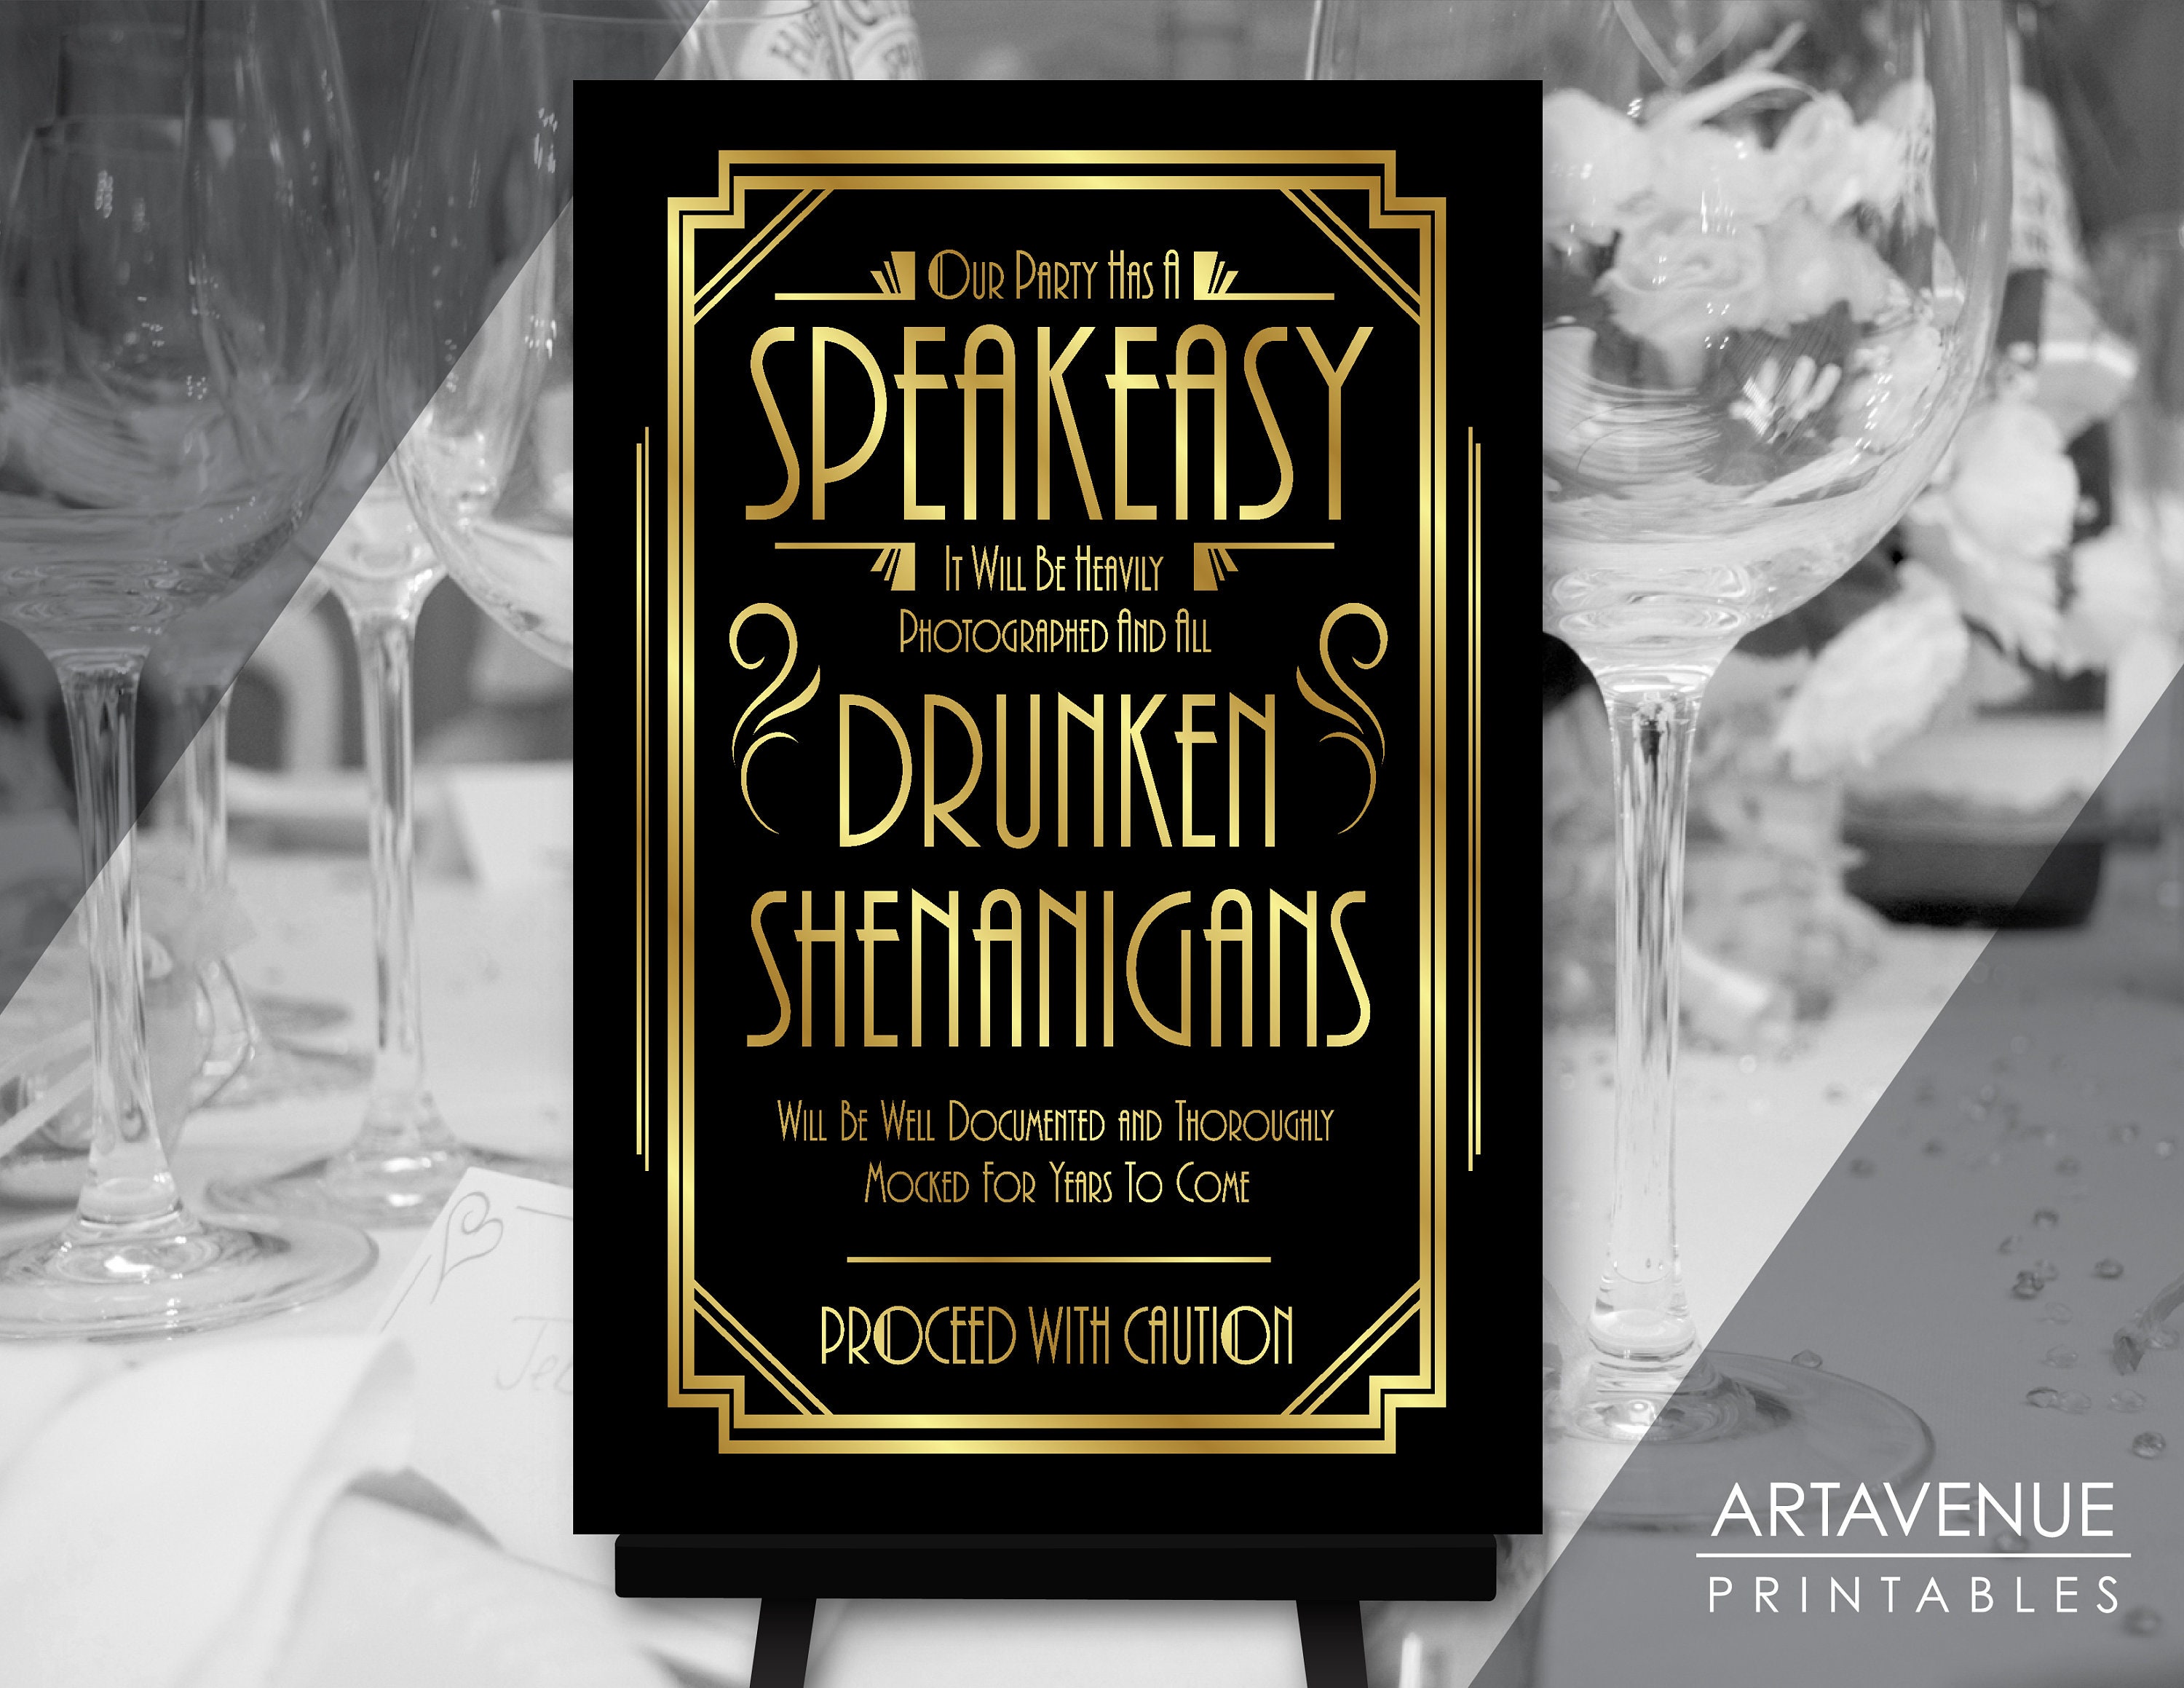 1920s Party Decoration Speakeasy 1000+ ideas about speakeasy party on